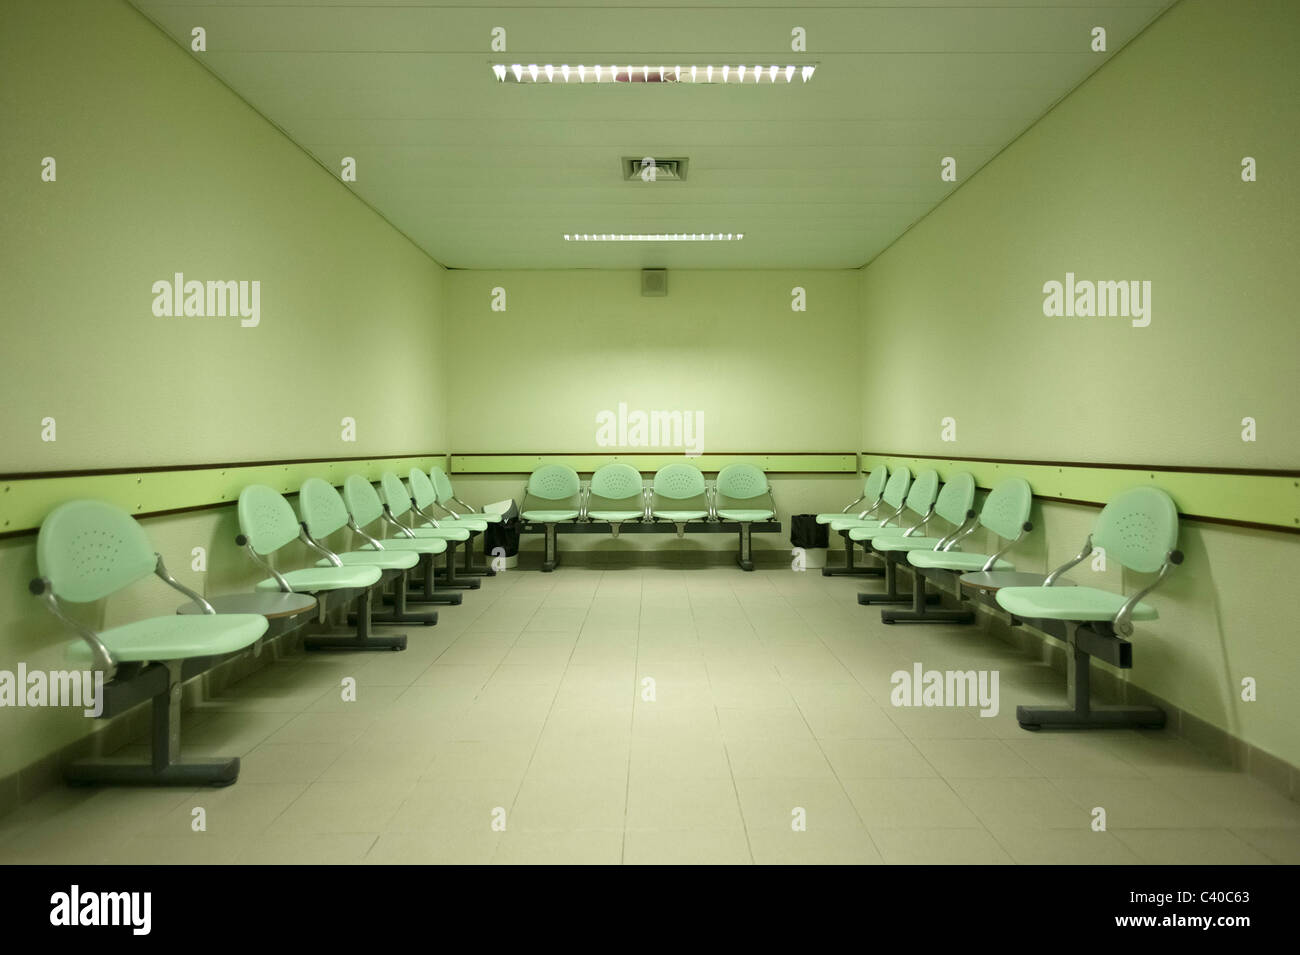 Empty hospital waiting room Stock Photo - Alamy